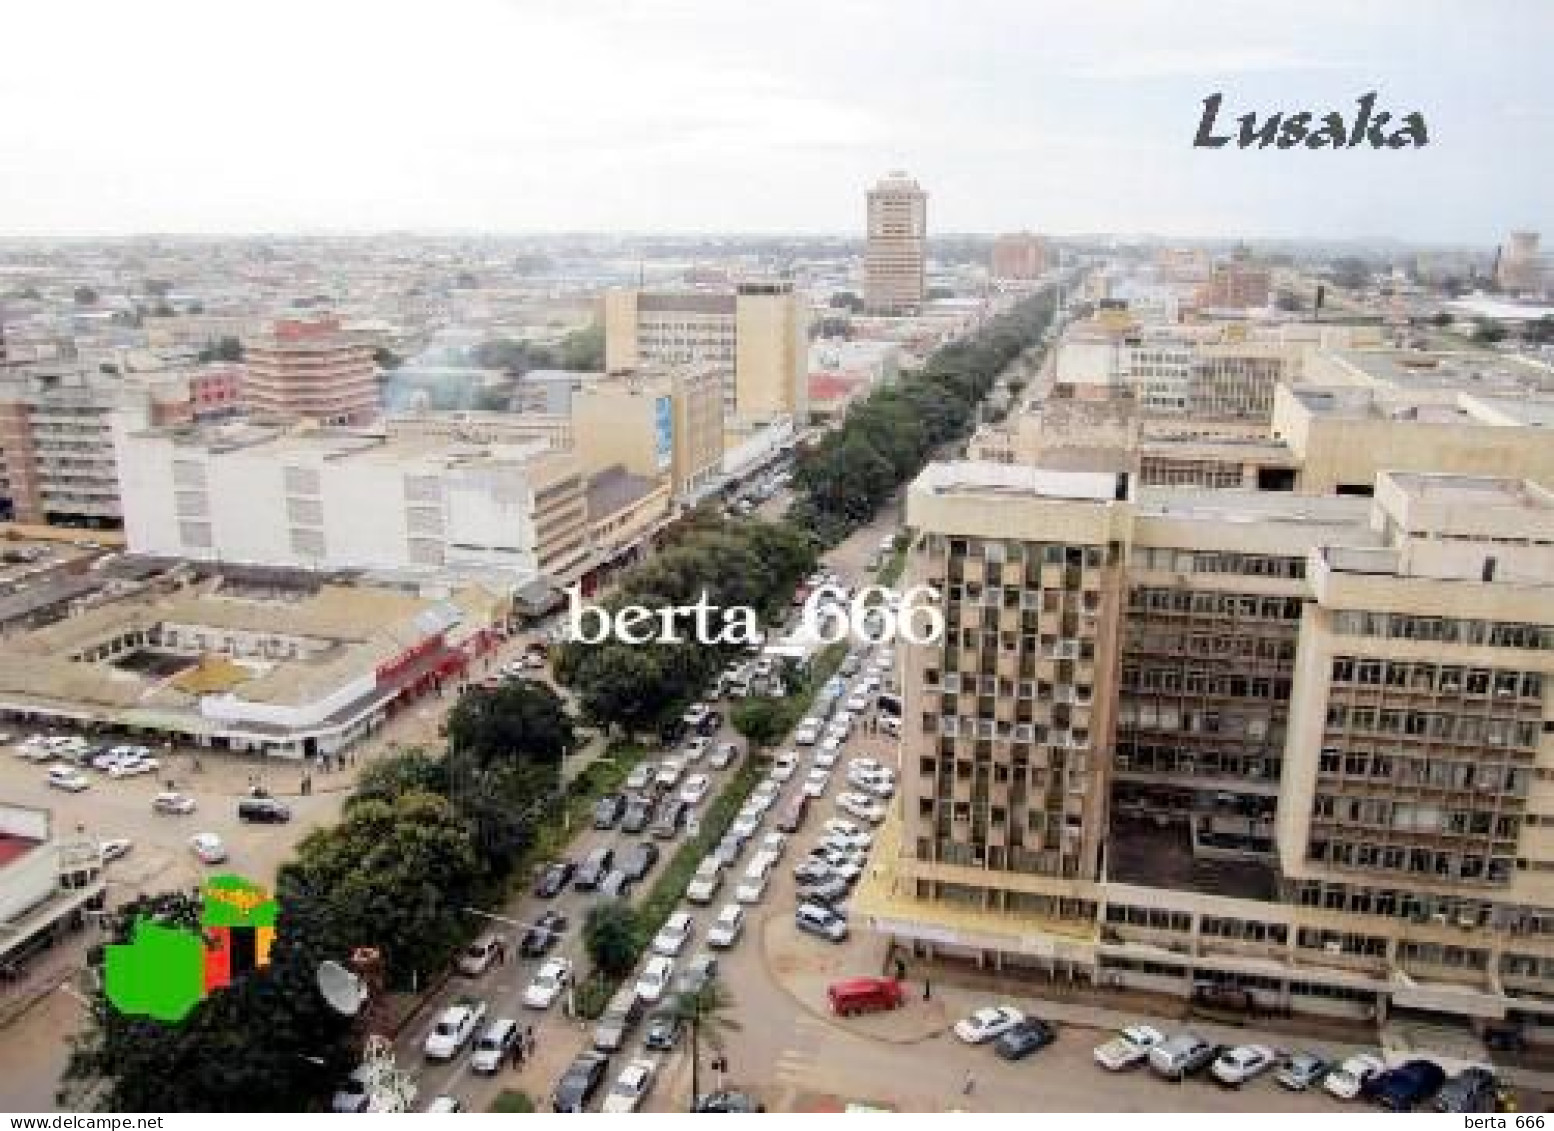 Zambia Lusaka Aerial View New Postcard - Sambia